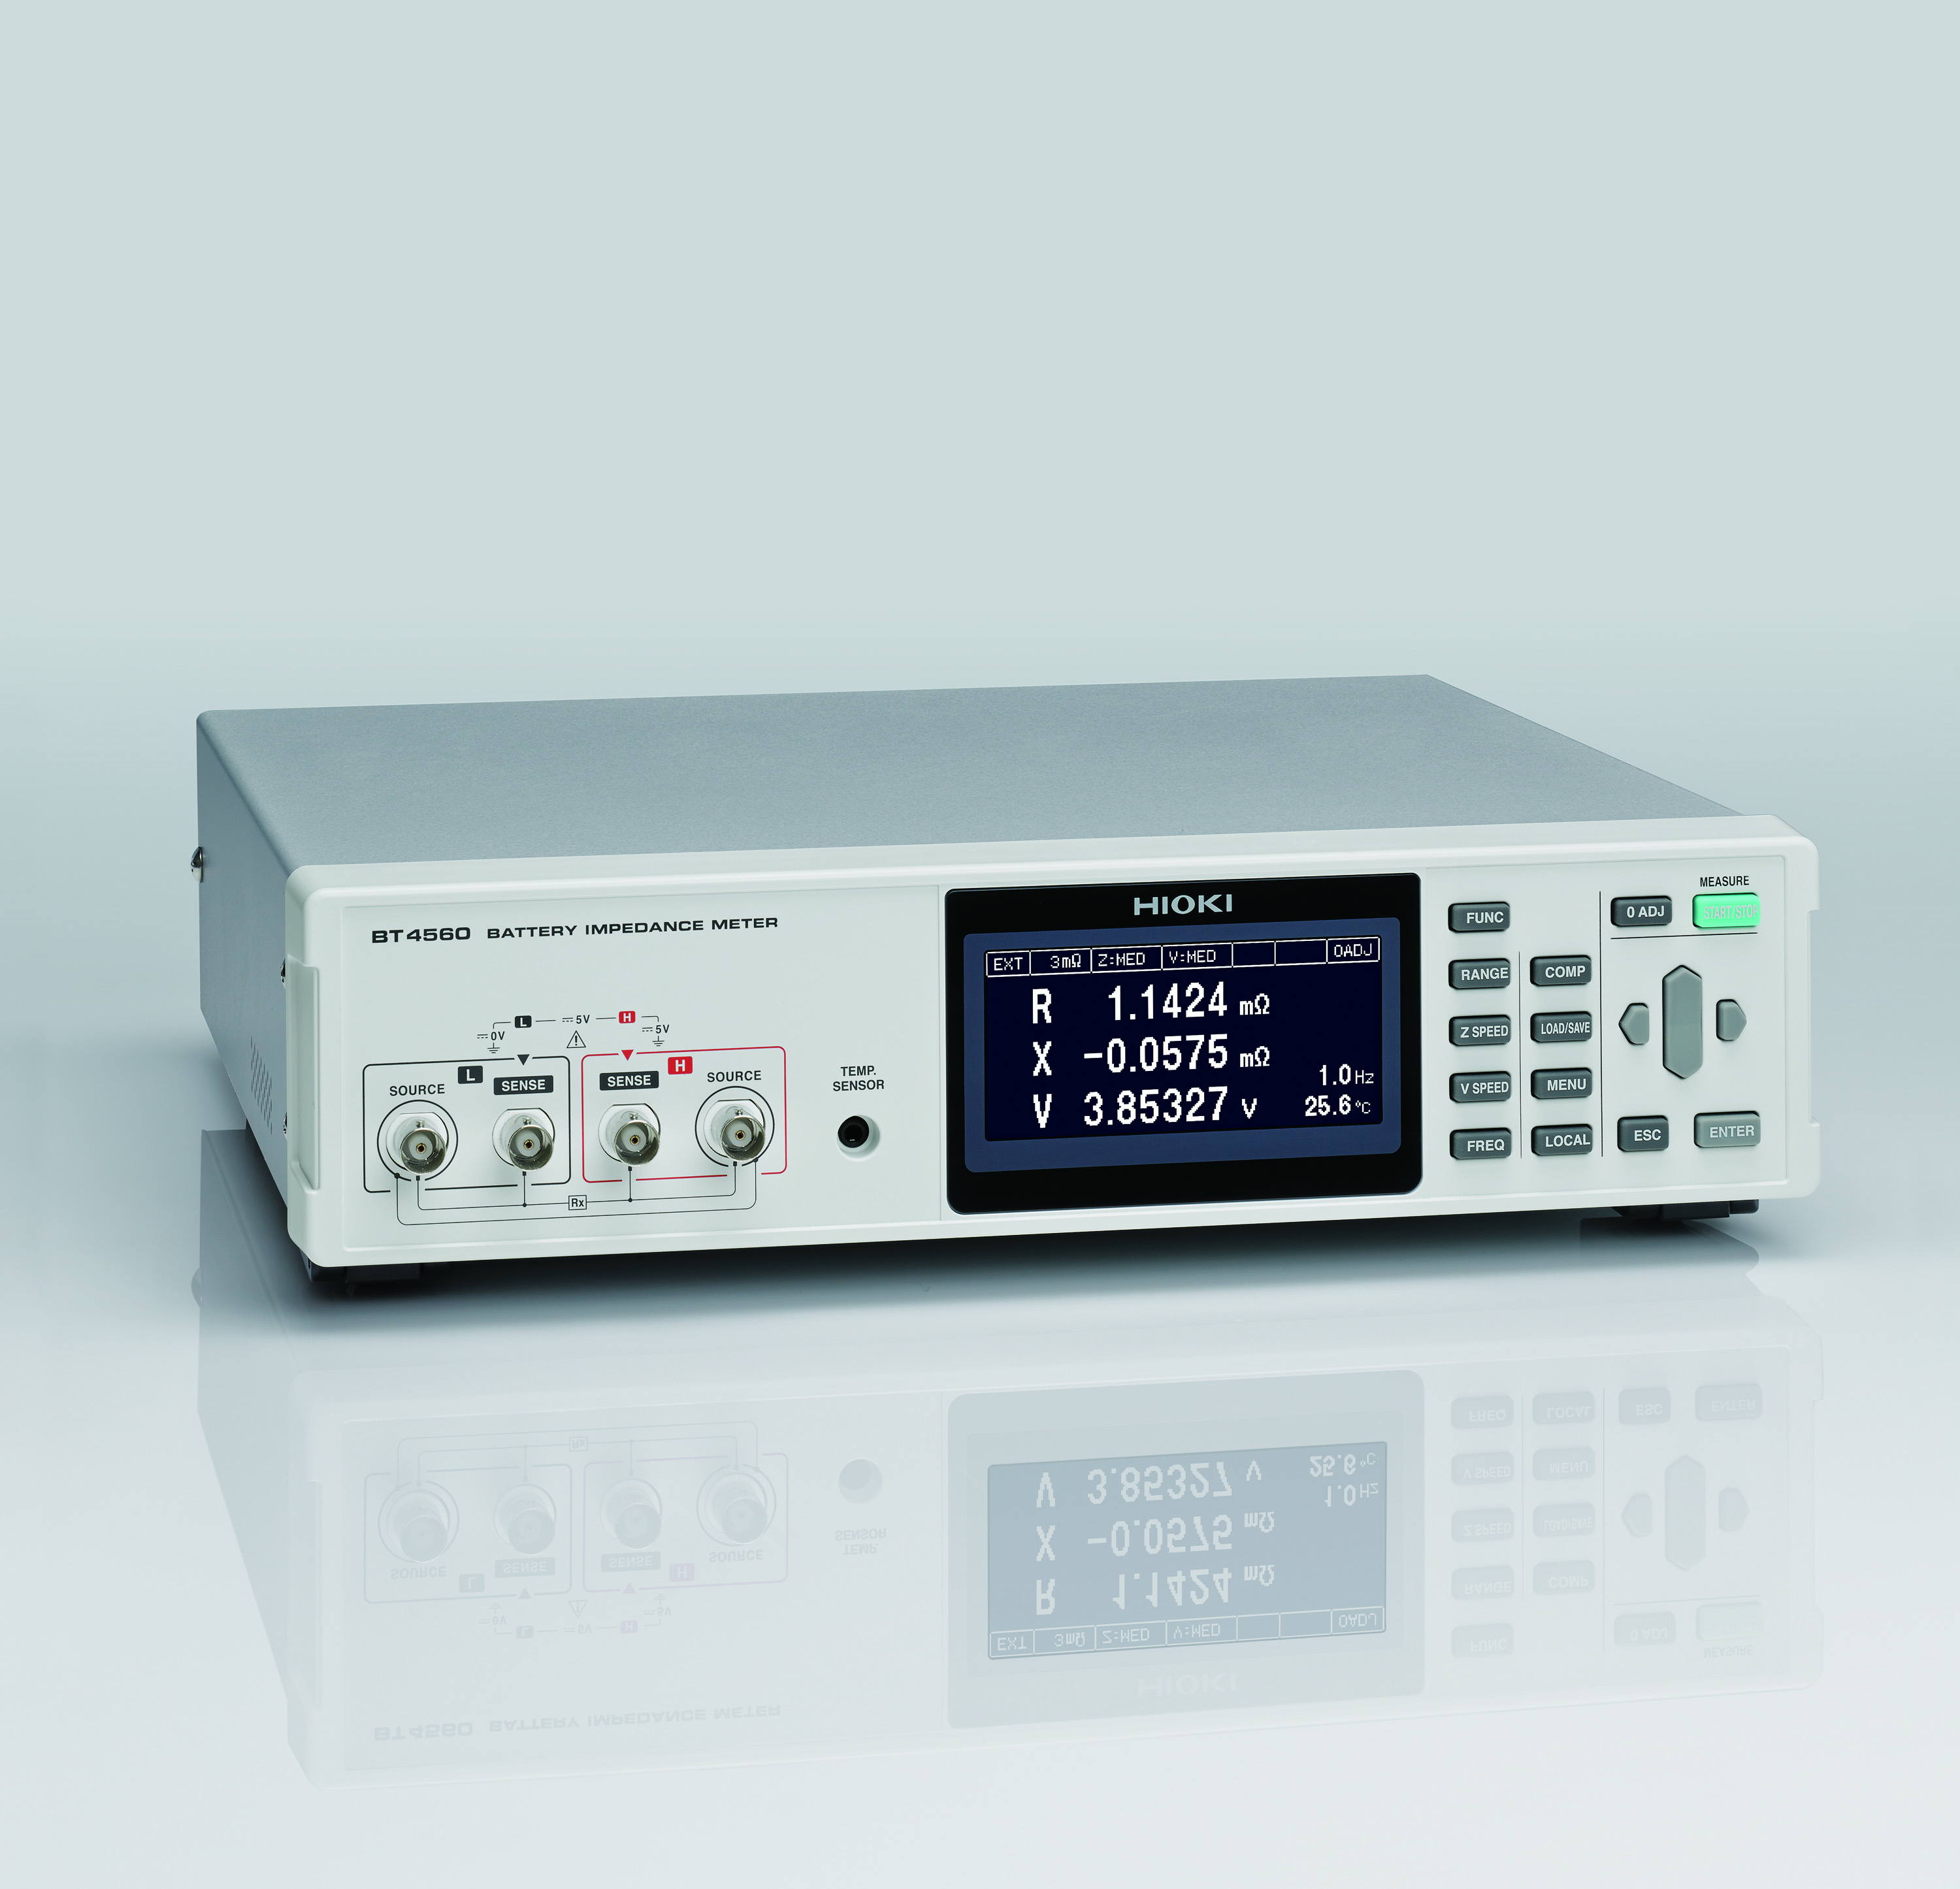 Hioki BT4560 Battery Impedance Meter